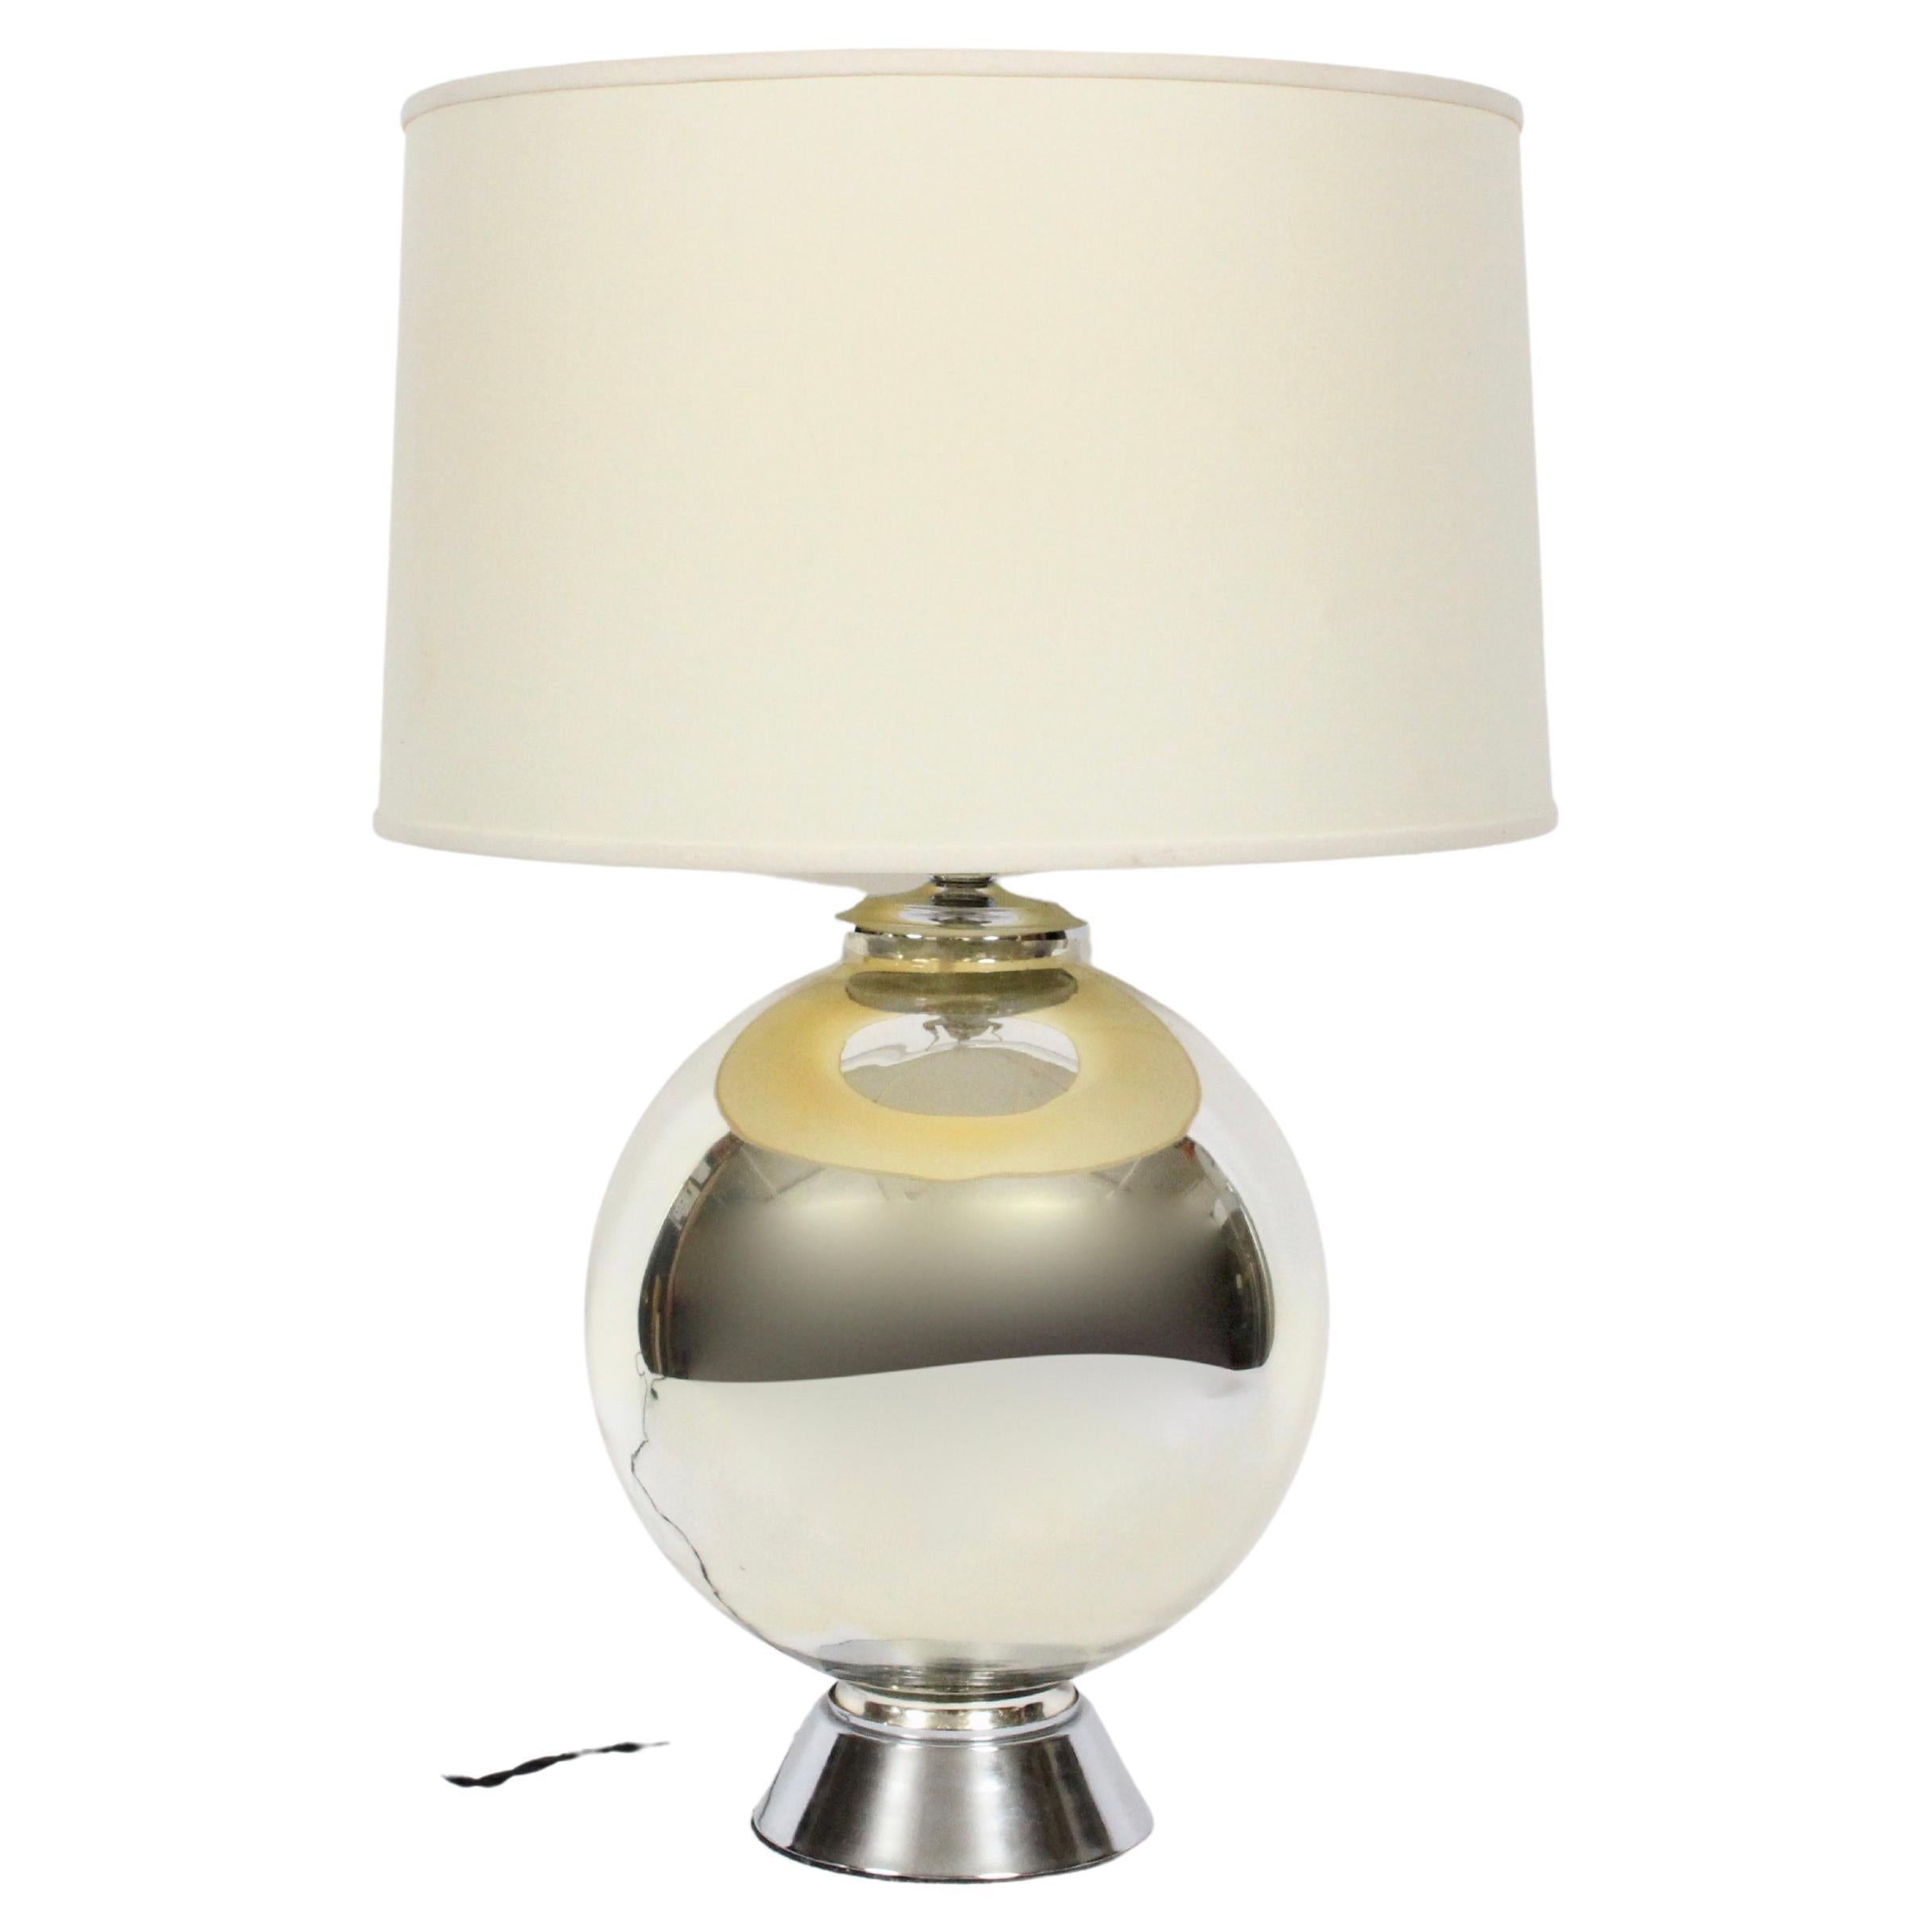 Chapman Co. Mercury Glass Ball Table Lamp, 1960's For Sale 7